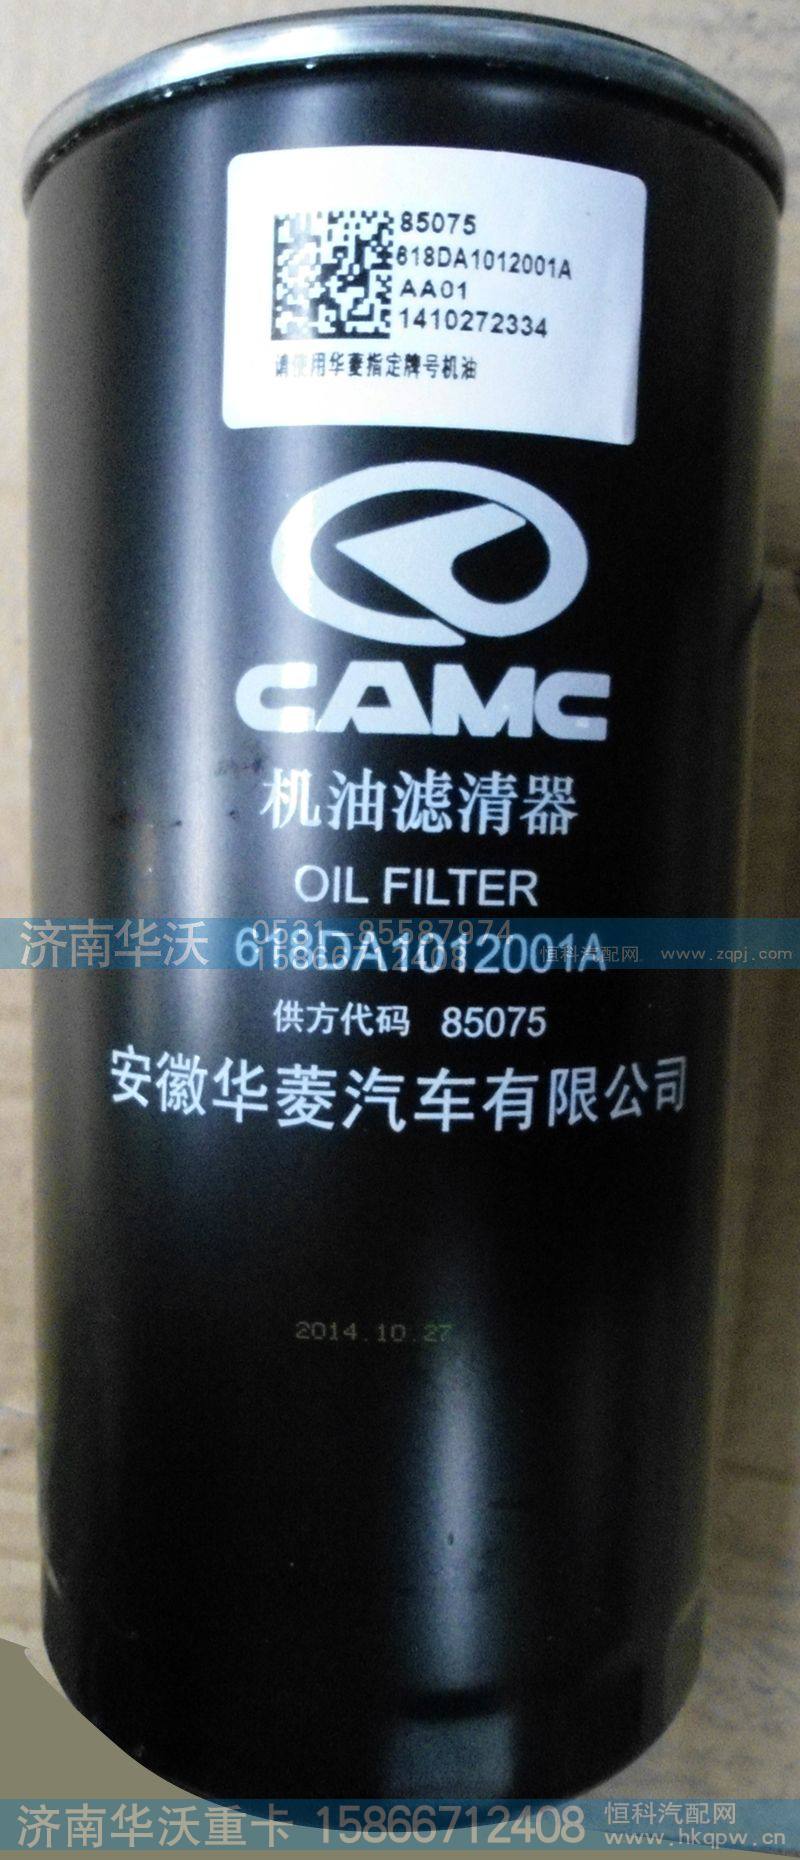 618DA1012001A,机油滤清器,济南华沃重卡汽车贸易有限公司